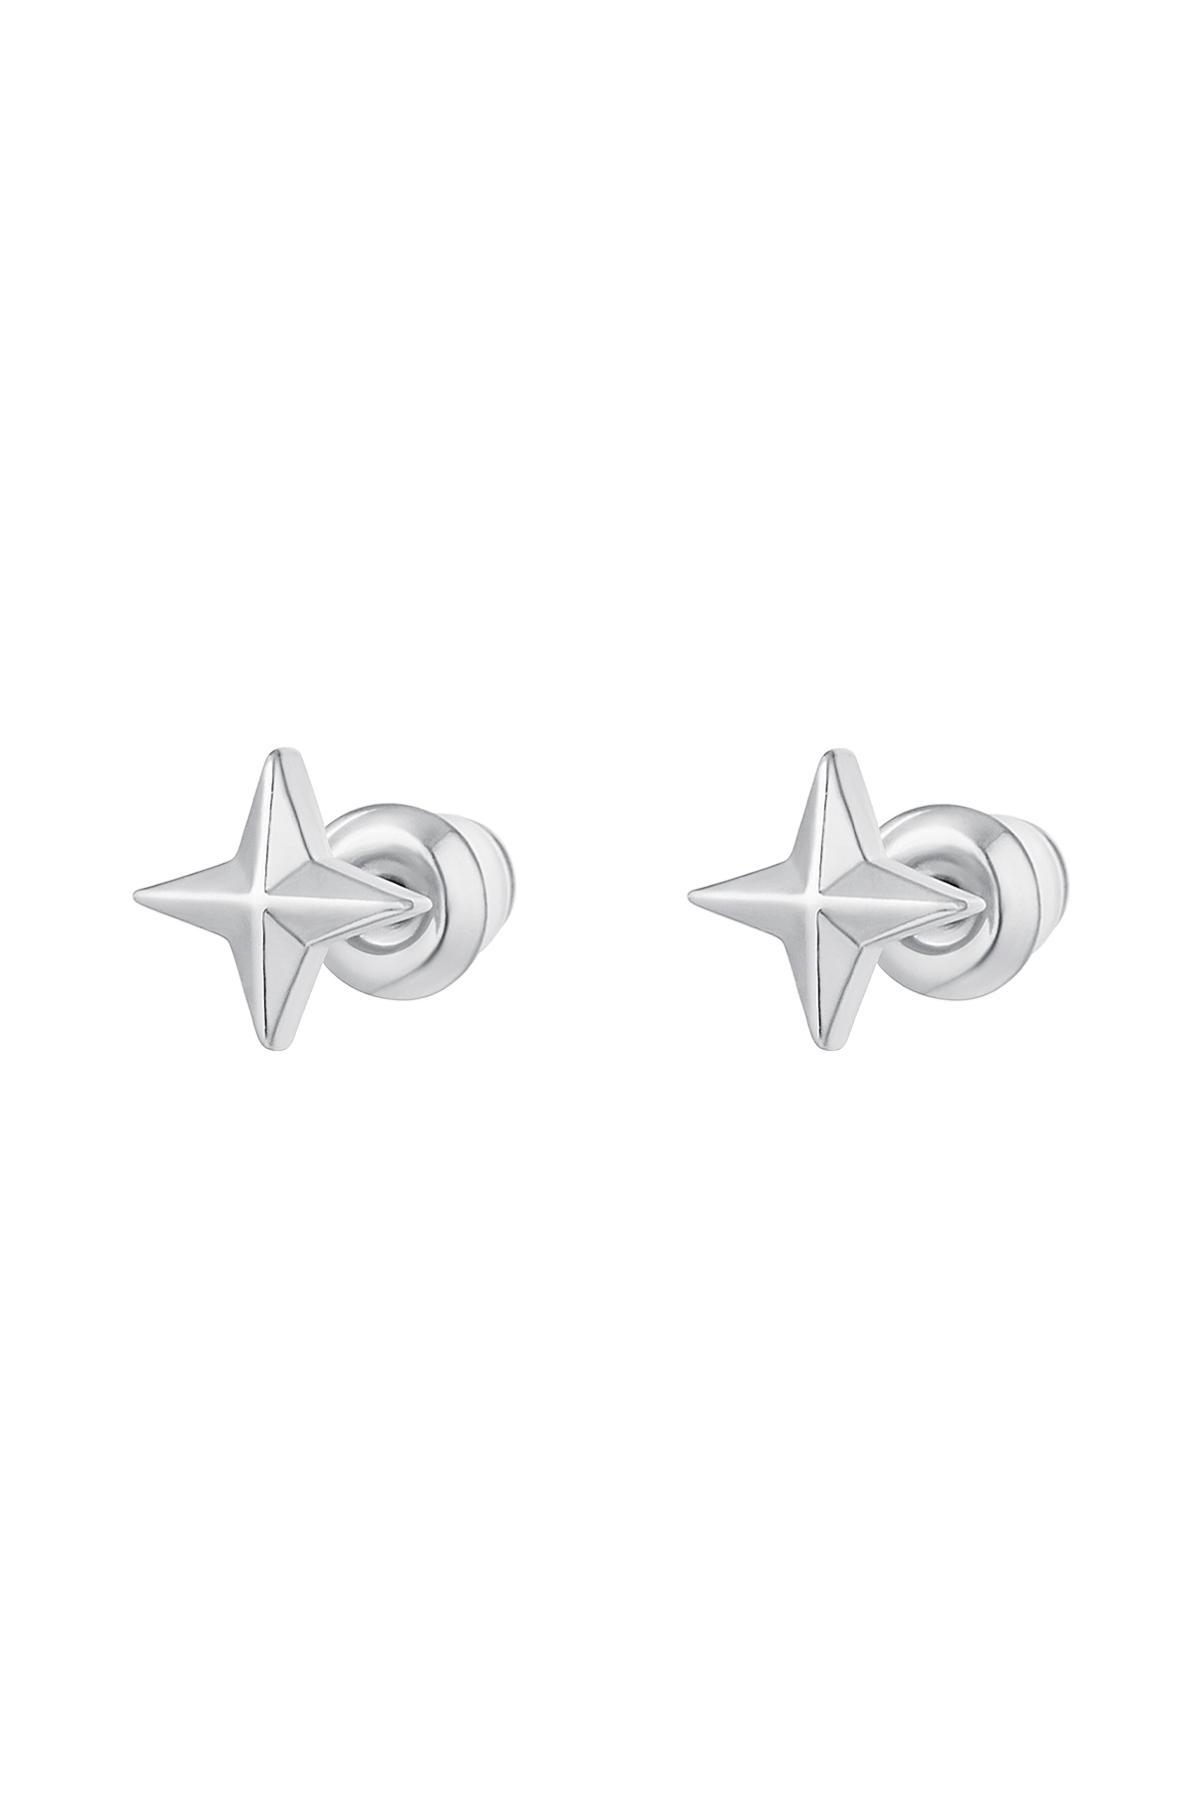 Ohrstecker Stern - Kollektion Sparkle Silber Kupfer